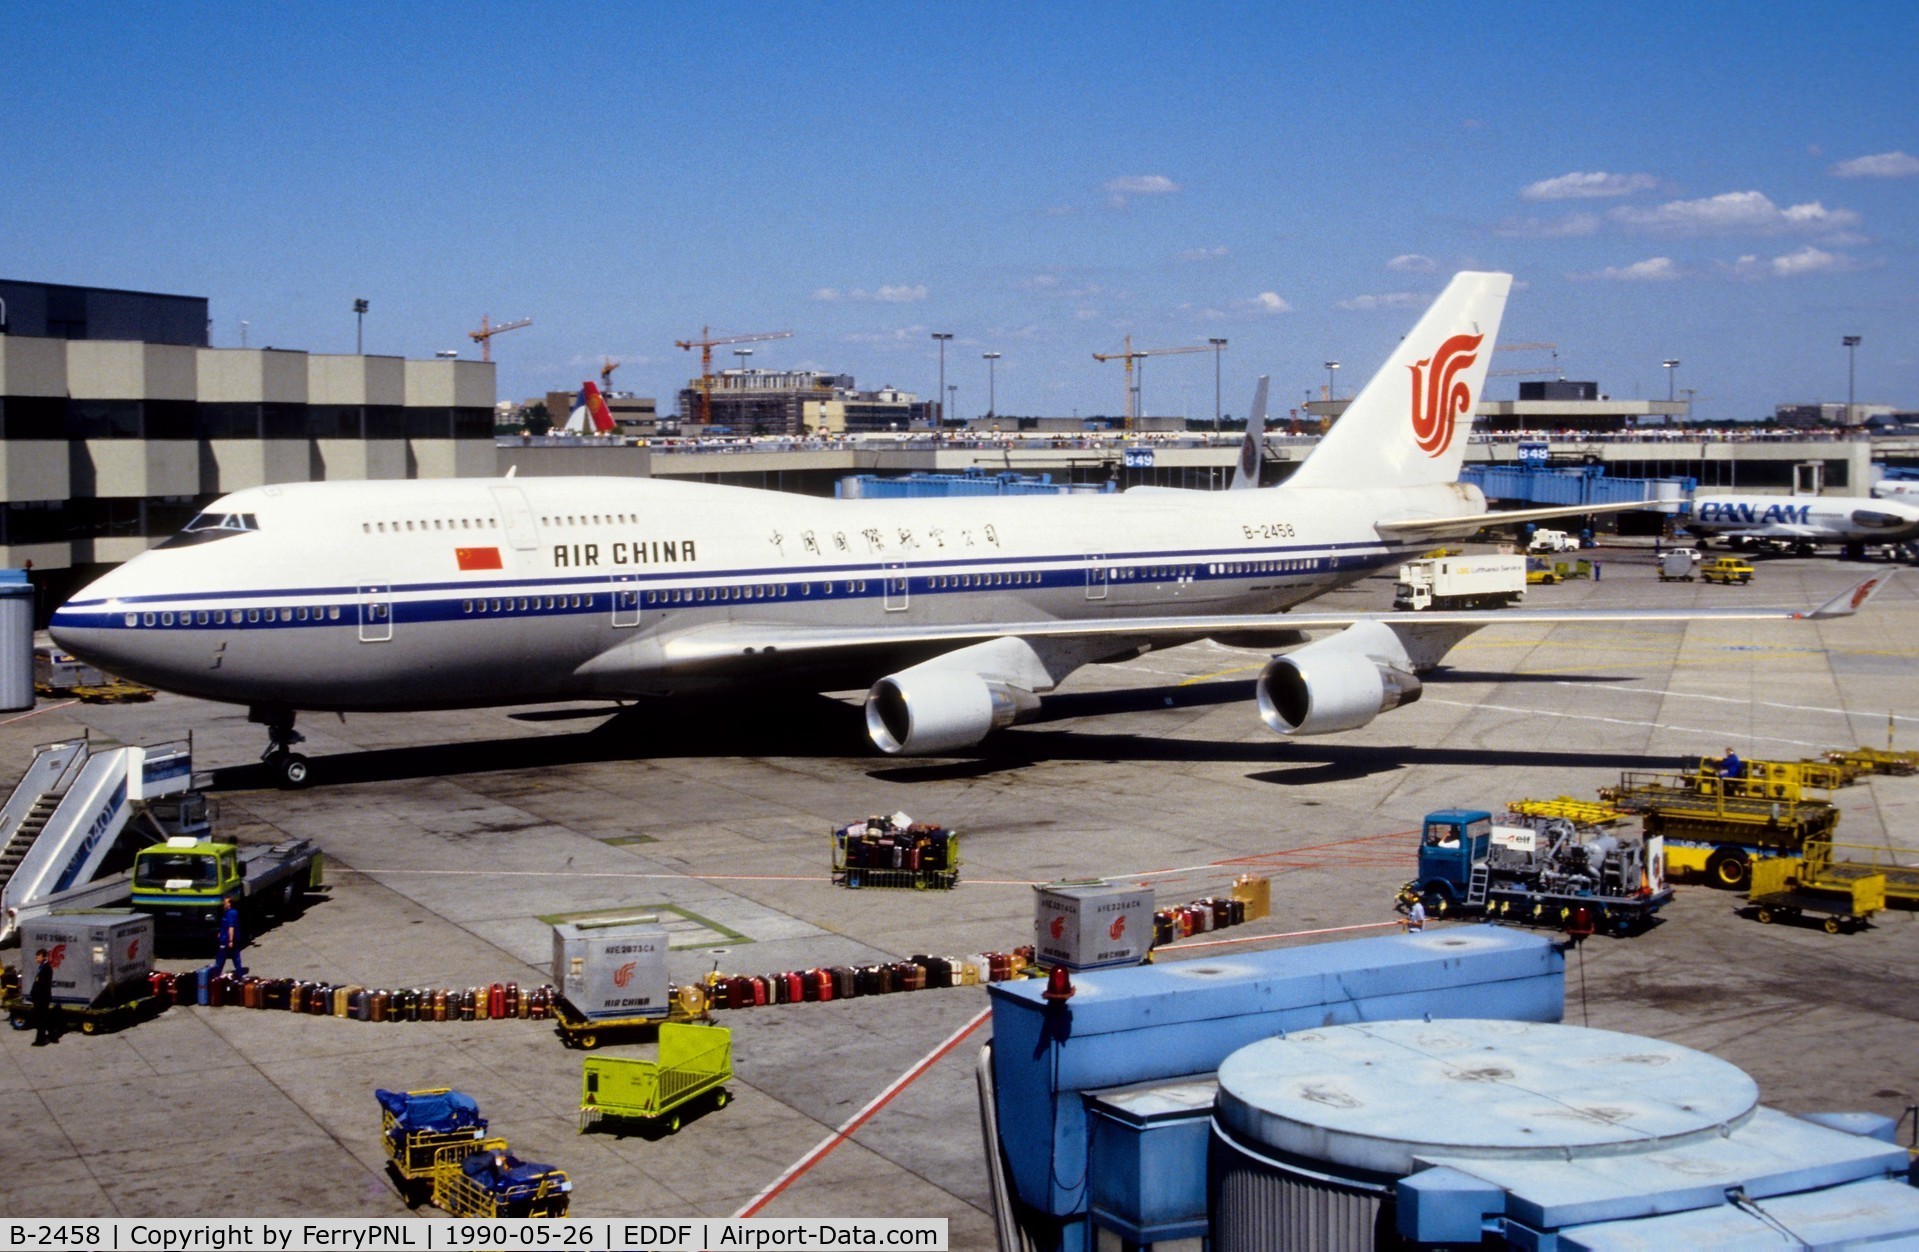 B-2458, 1990 Boeing 747-4J6/BCF C/N 24347, Air China B744 at its gate